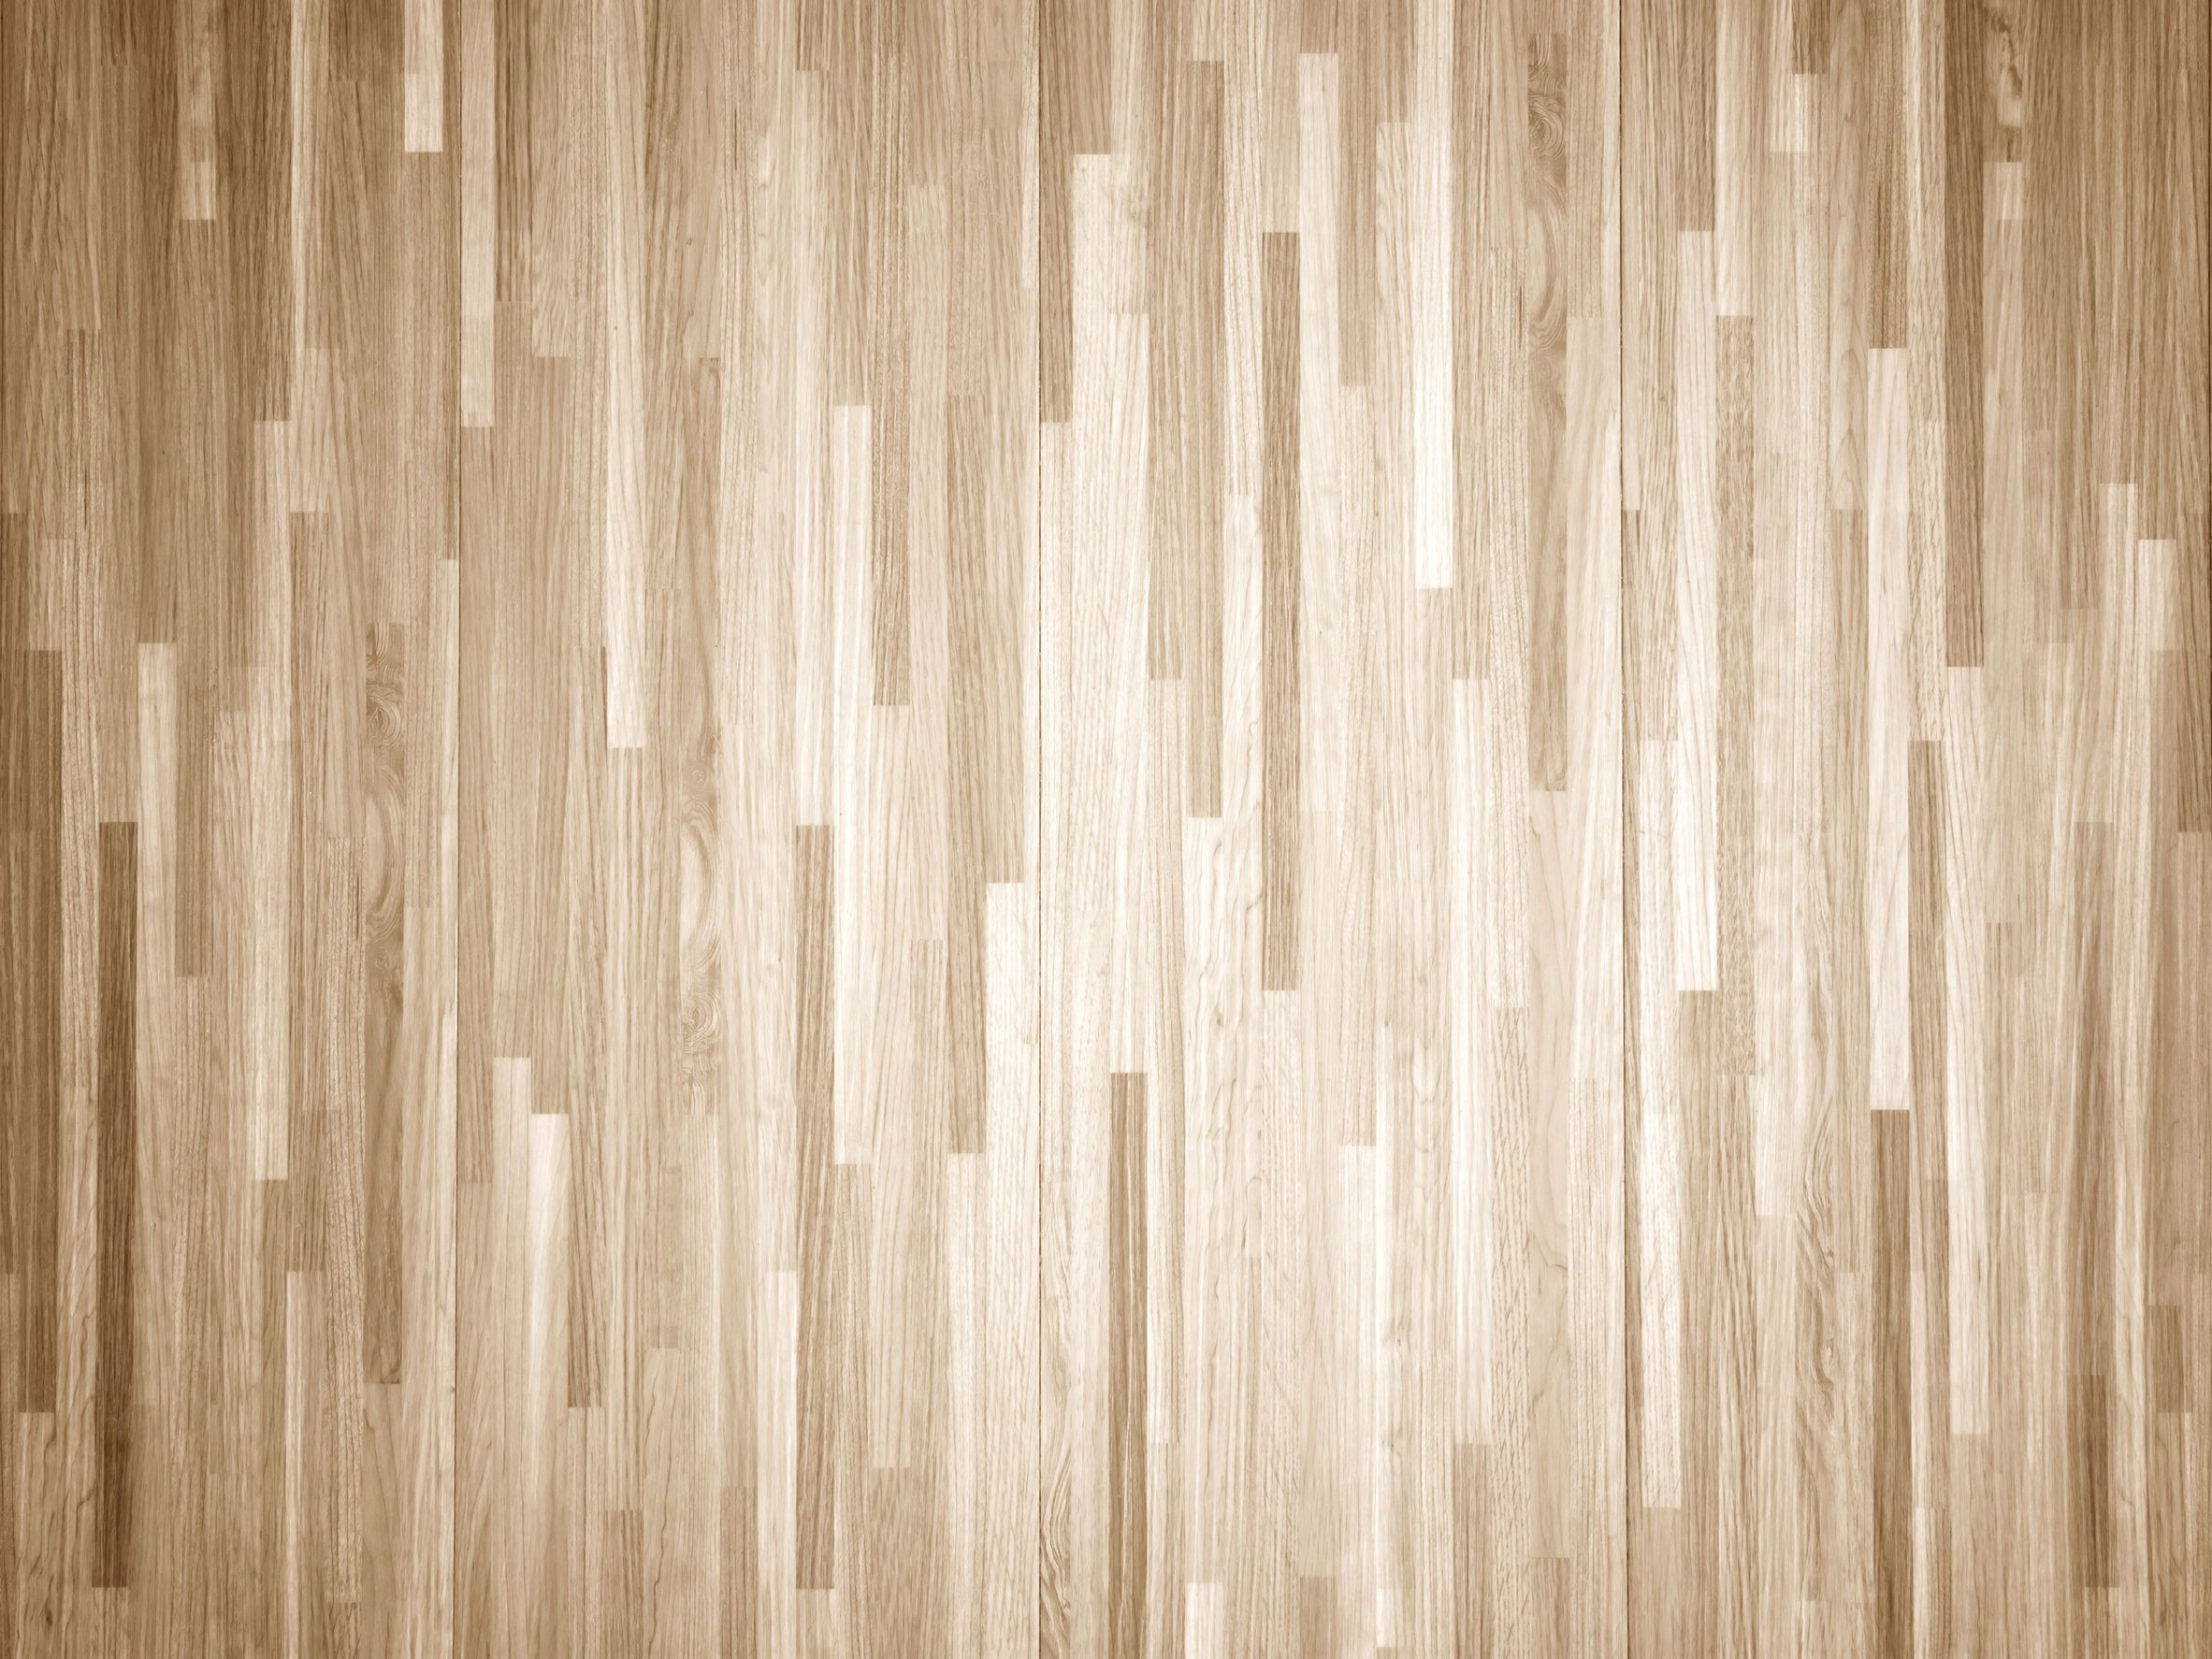 11 Stylish Hardwood Floor Cleaning Companies Near Me 2023 free download hardwood floor cleaning companies near me of how to chemically strip wood floors woodfloordoctor com inside you